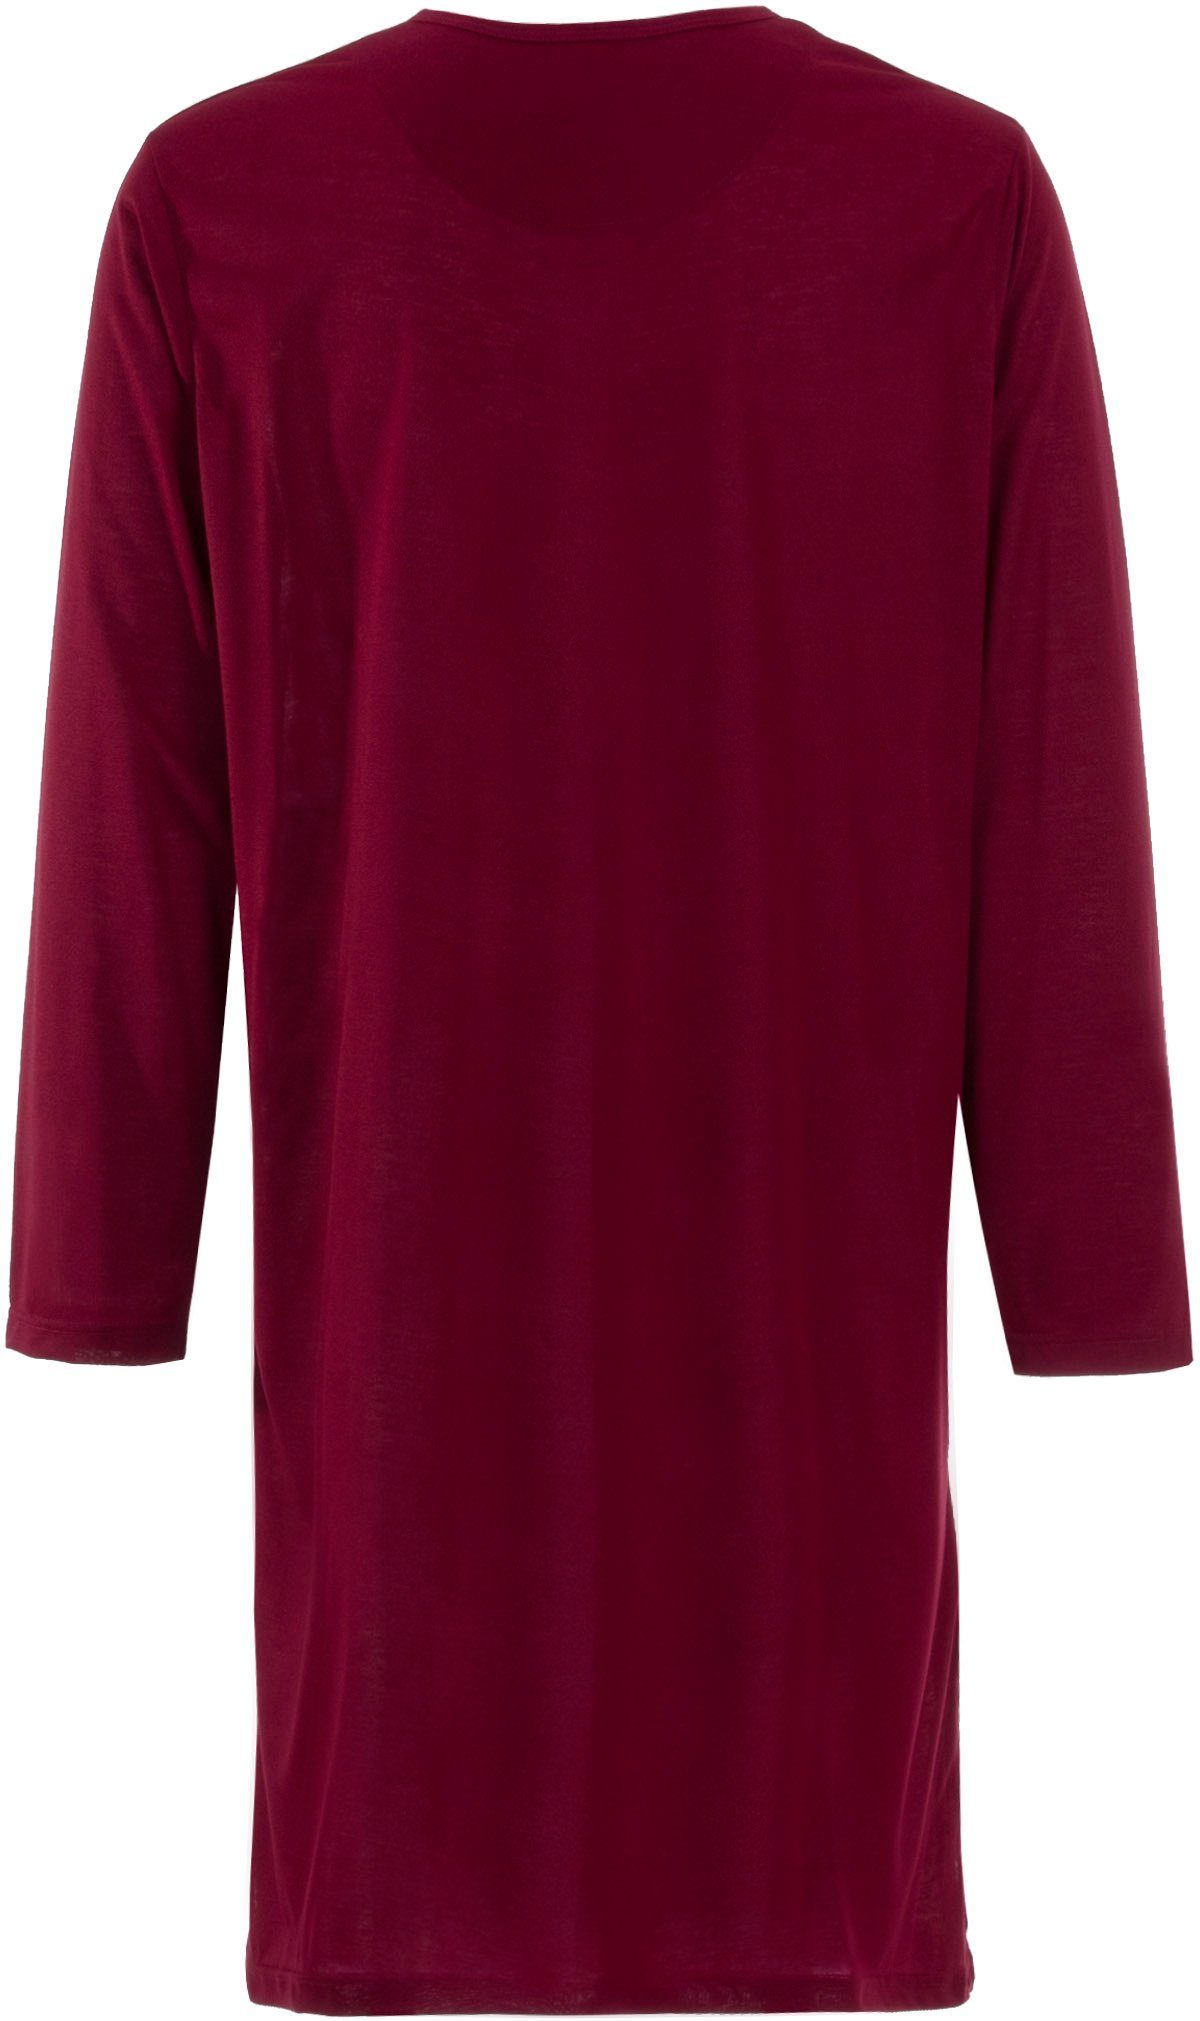 Lucky Nachthemd Nachthemd Langarm - Uni mit 3er Knopfleiste bordeaux